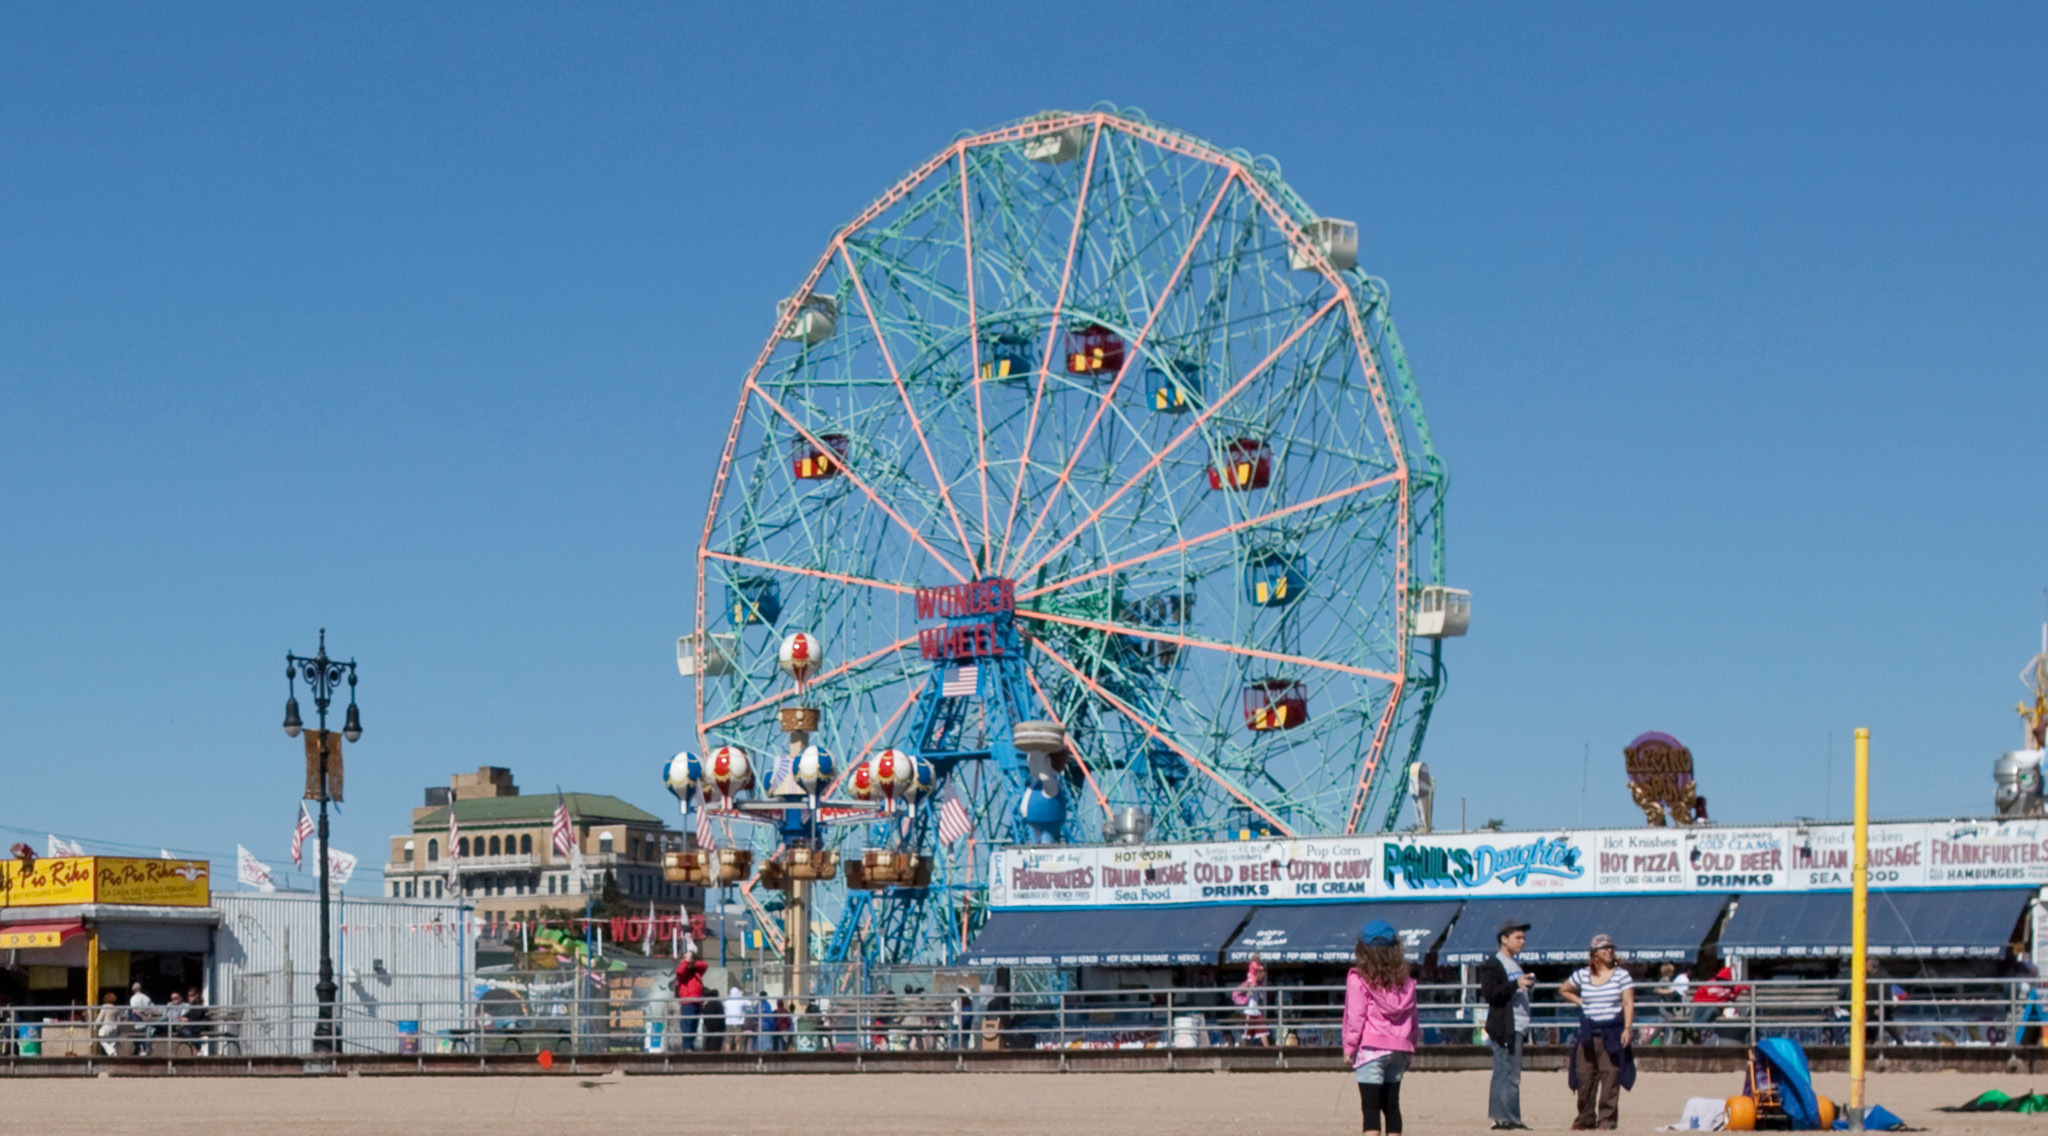 Giant Ferris wheel and restaurants along the sandy beach Coney Island - photo 8